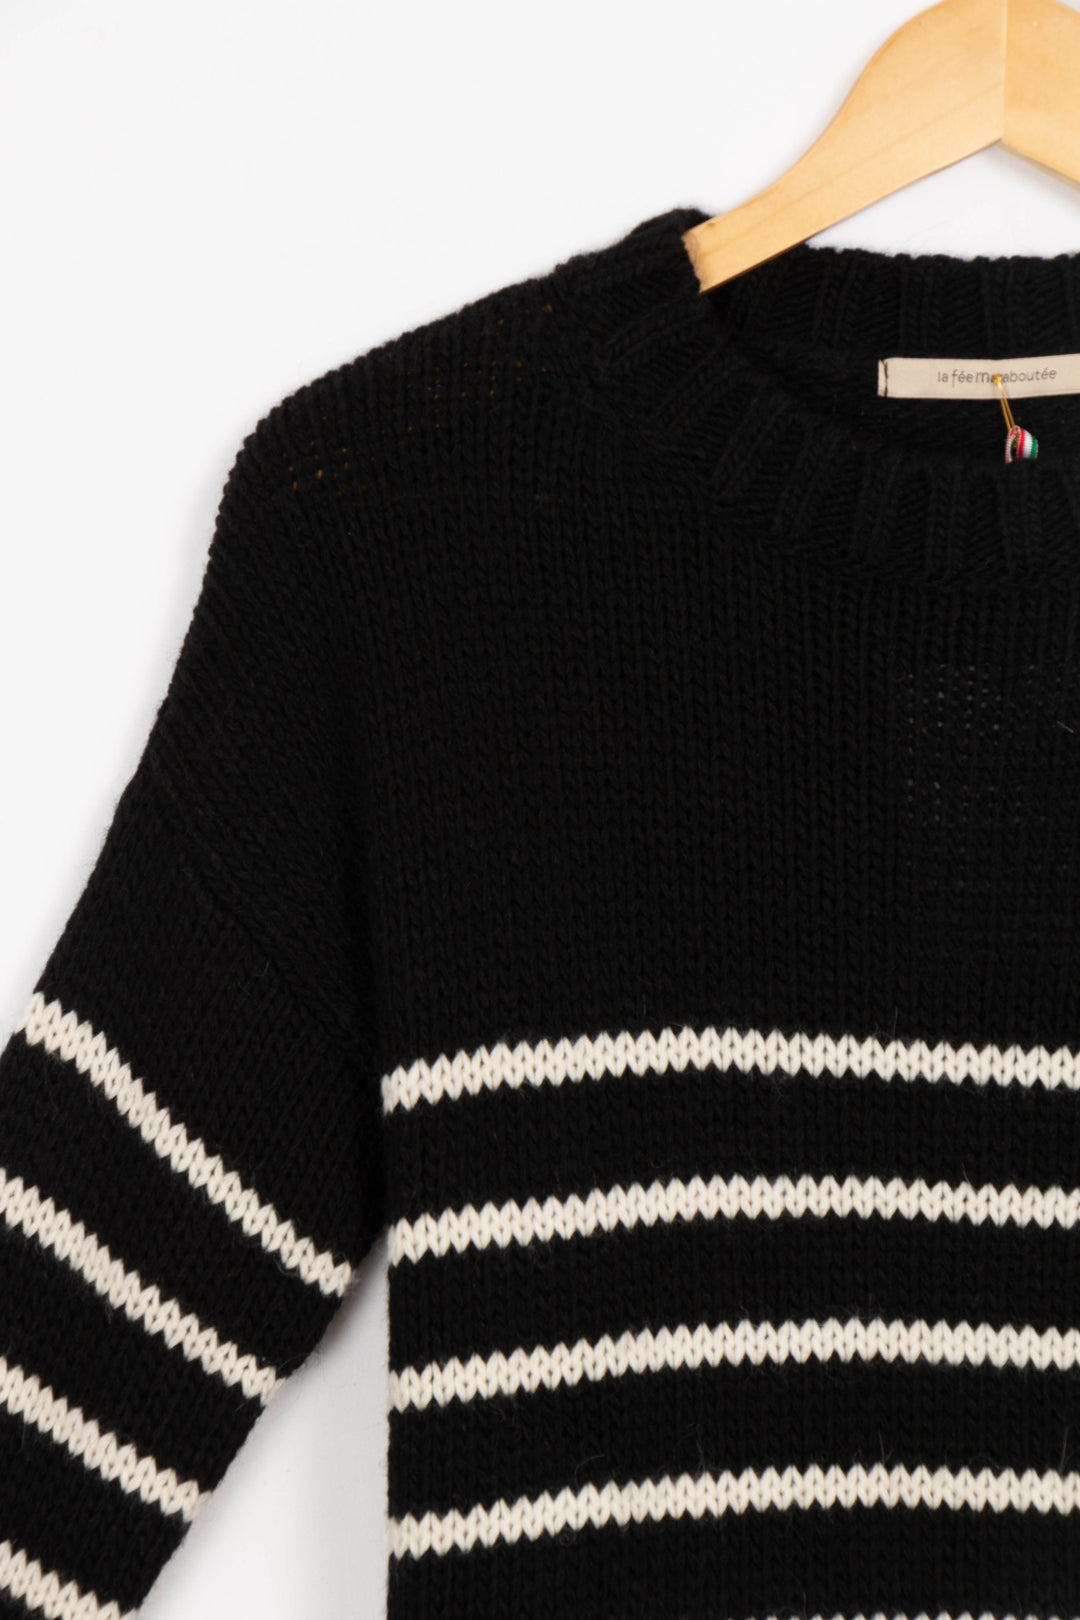 Black and white striped sweater - L